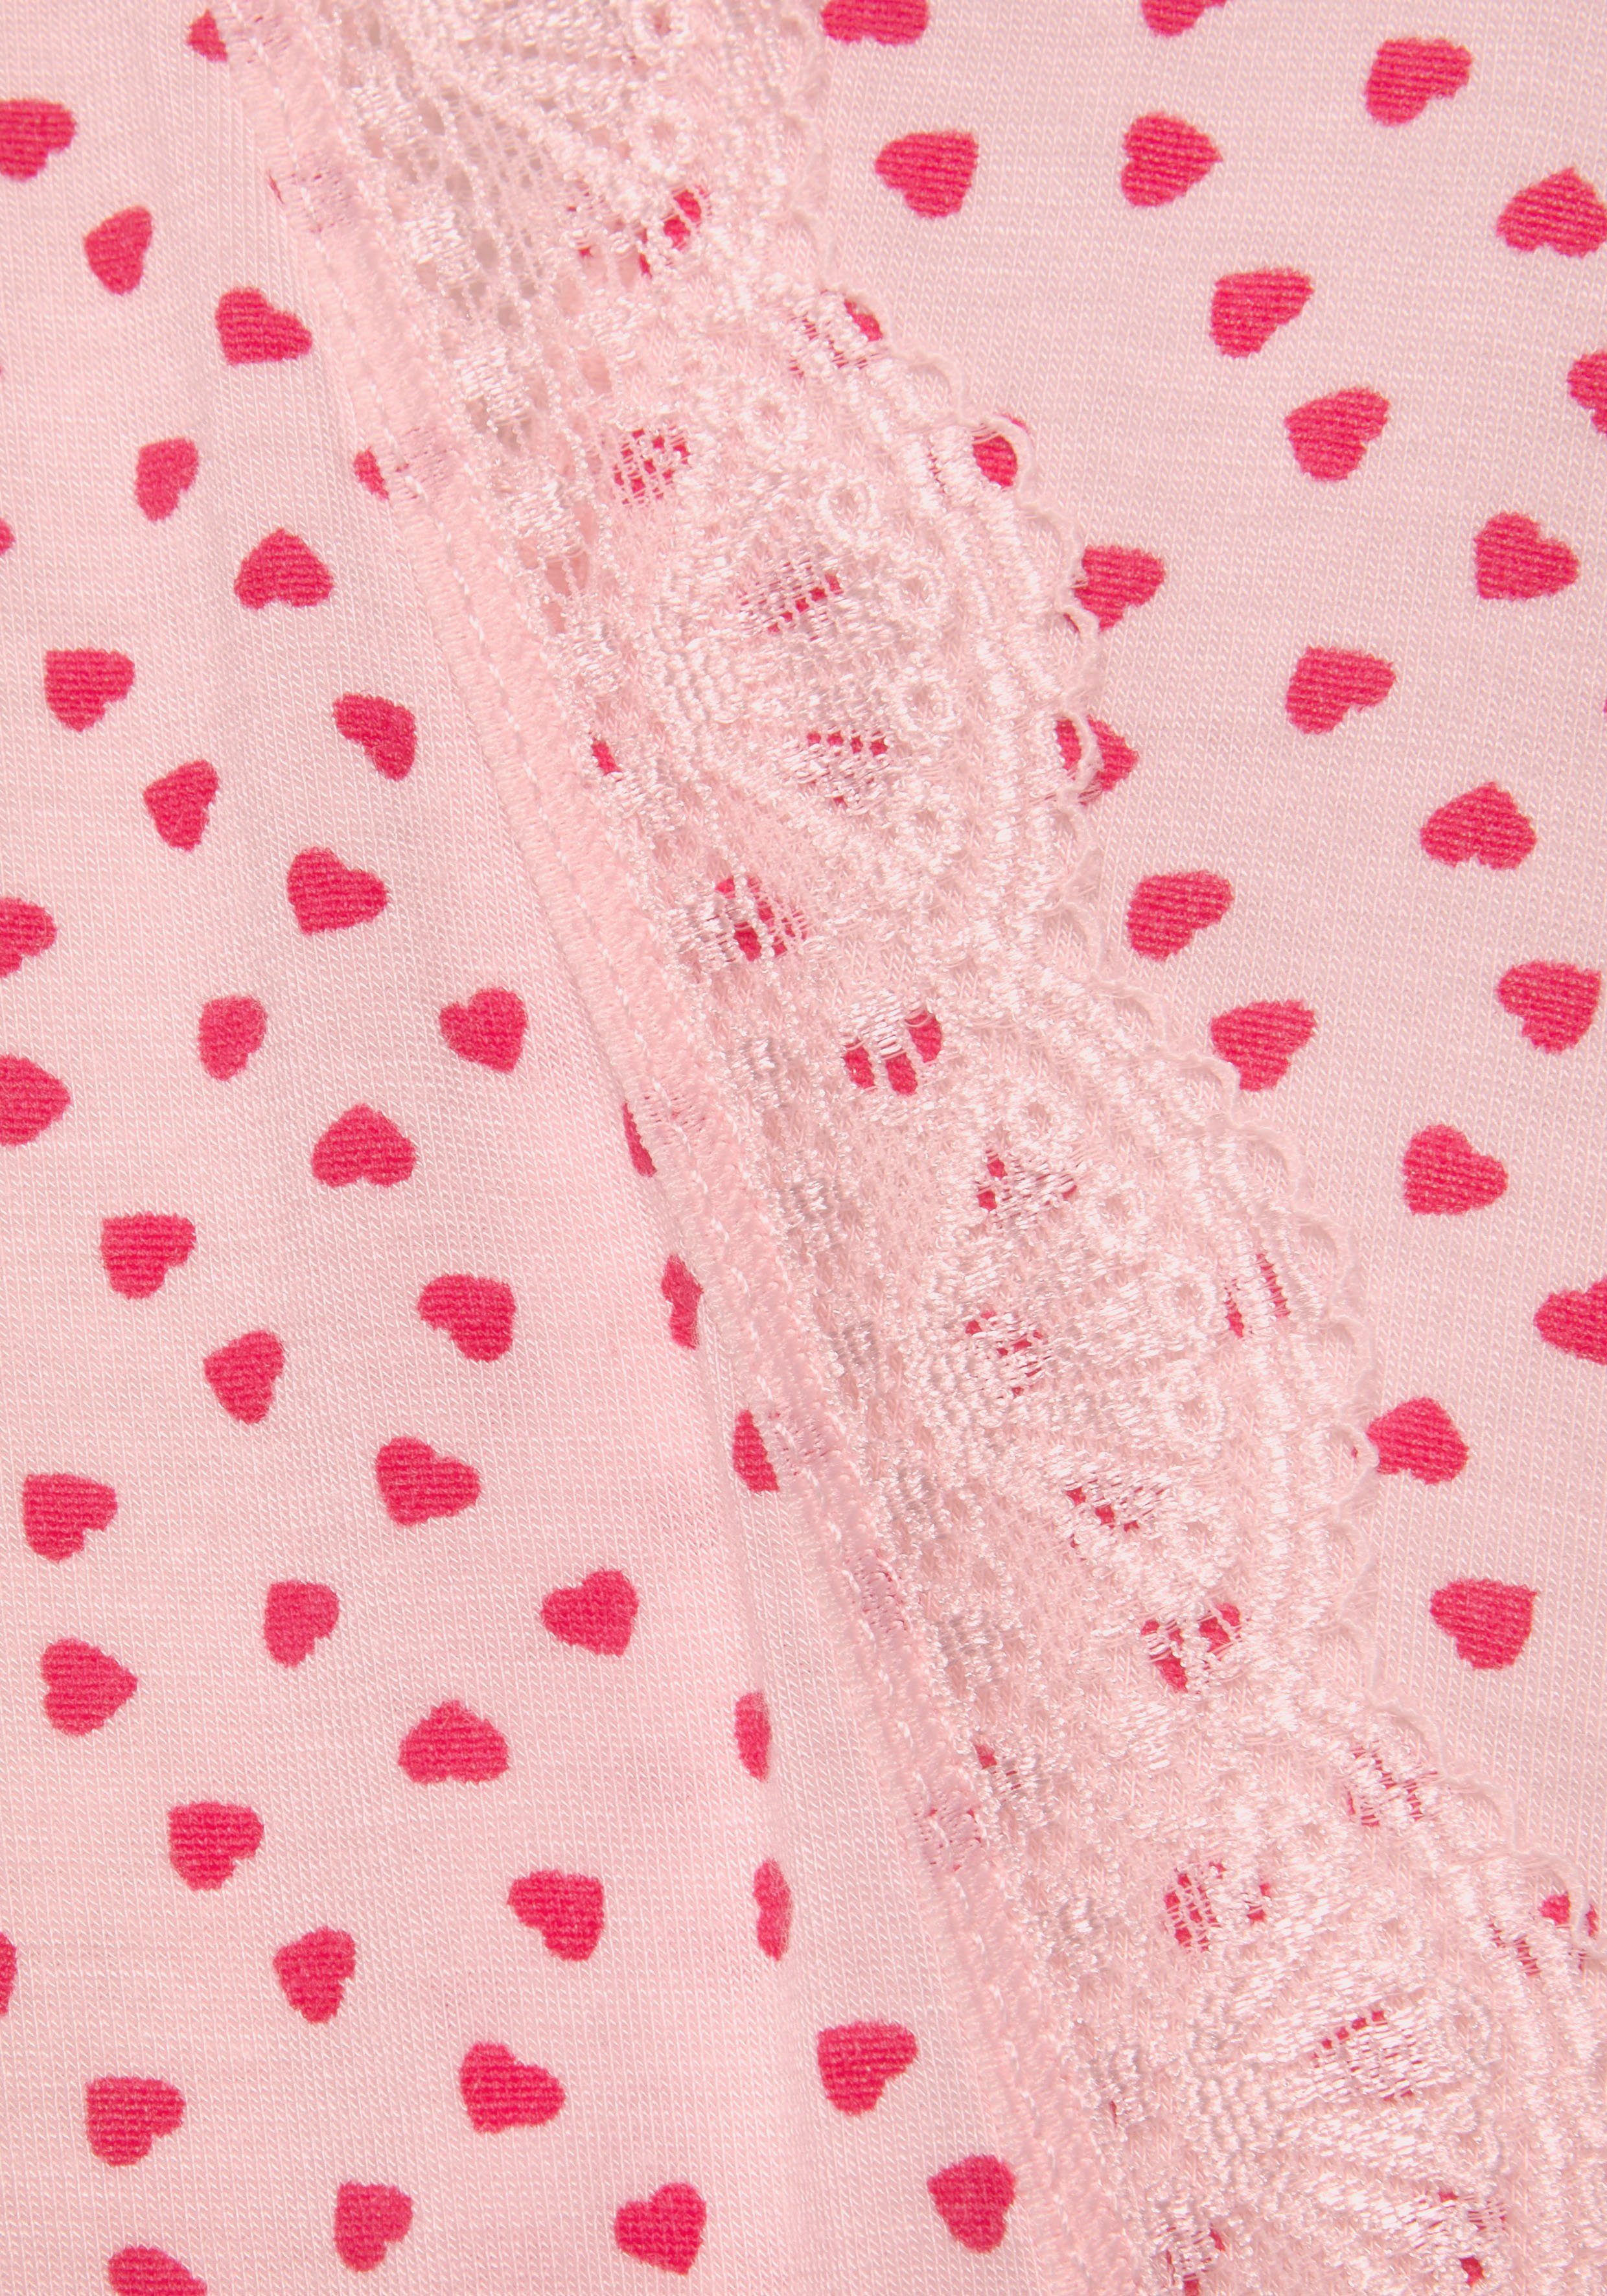 s.Oliver Kimono, Kurzform, Single-Jersey, Gürtel, mit Herzchendruck und hellrosa-gemustert Spitze